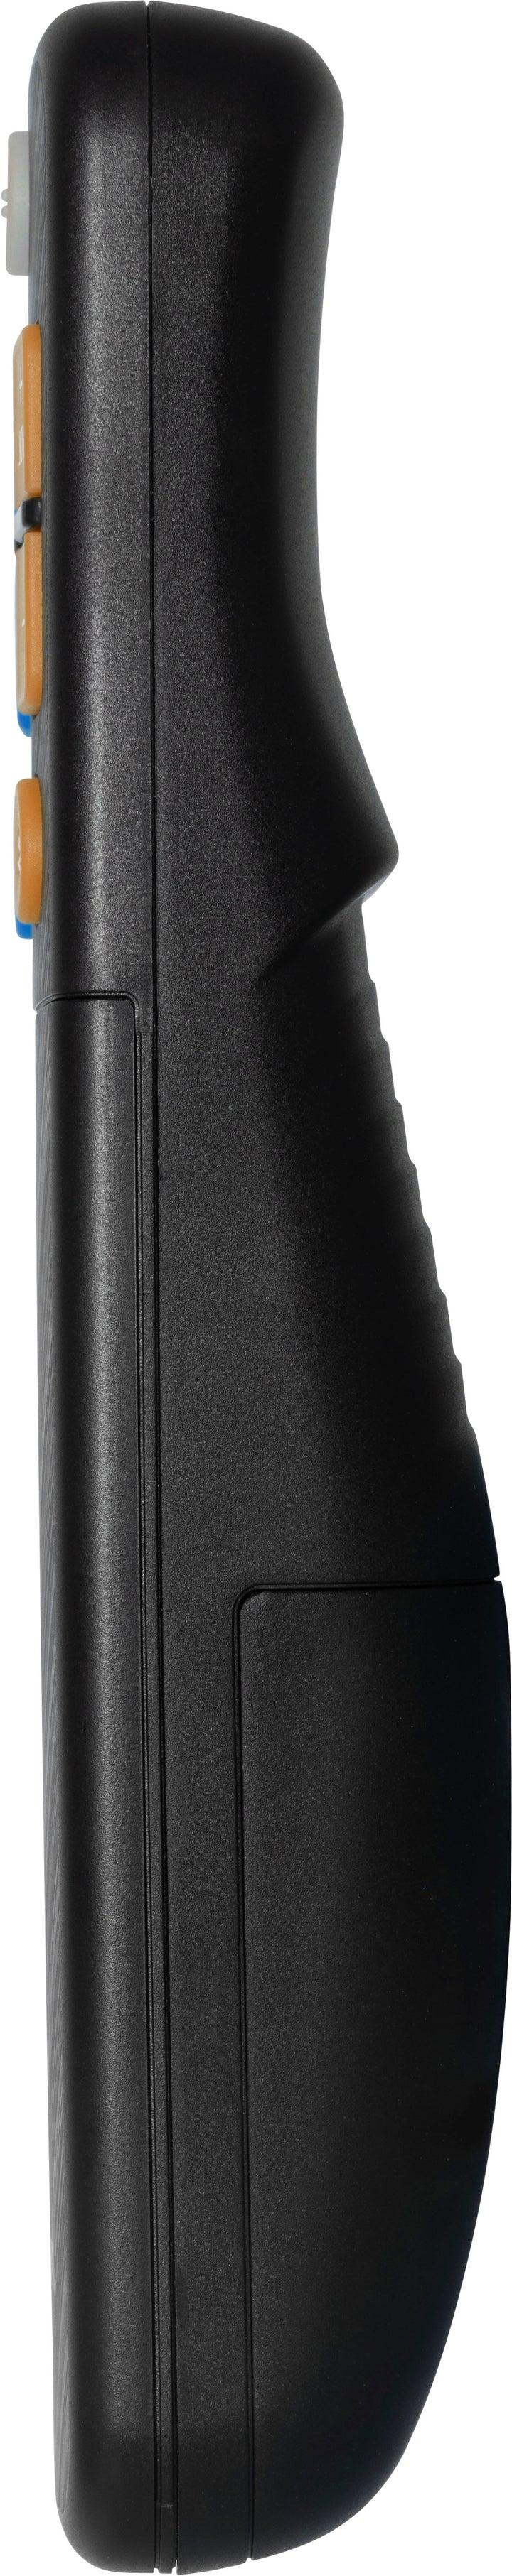 Philips - Elite EZ Slide 2-Device Universal Remote, Black_10